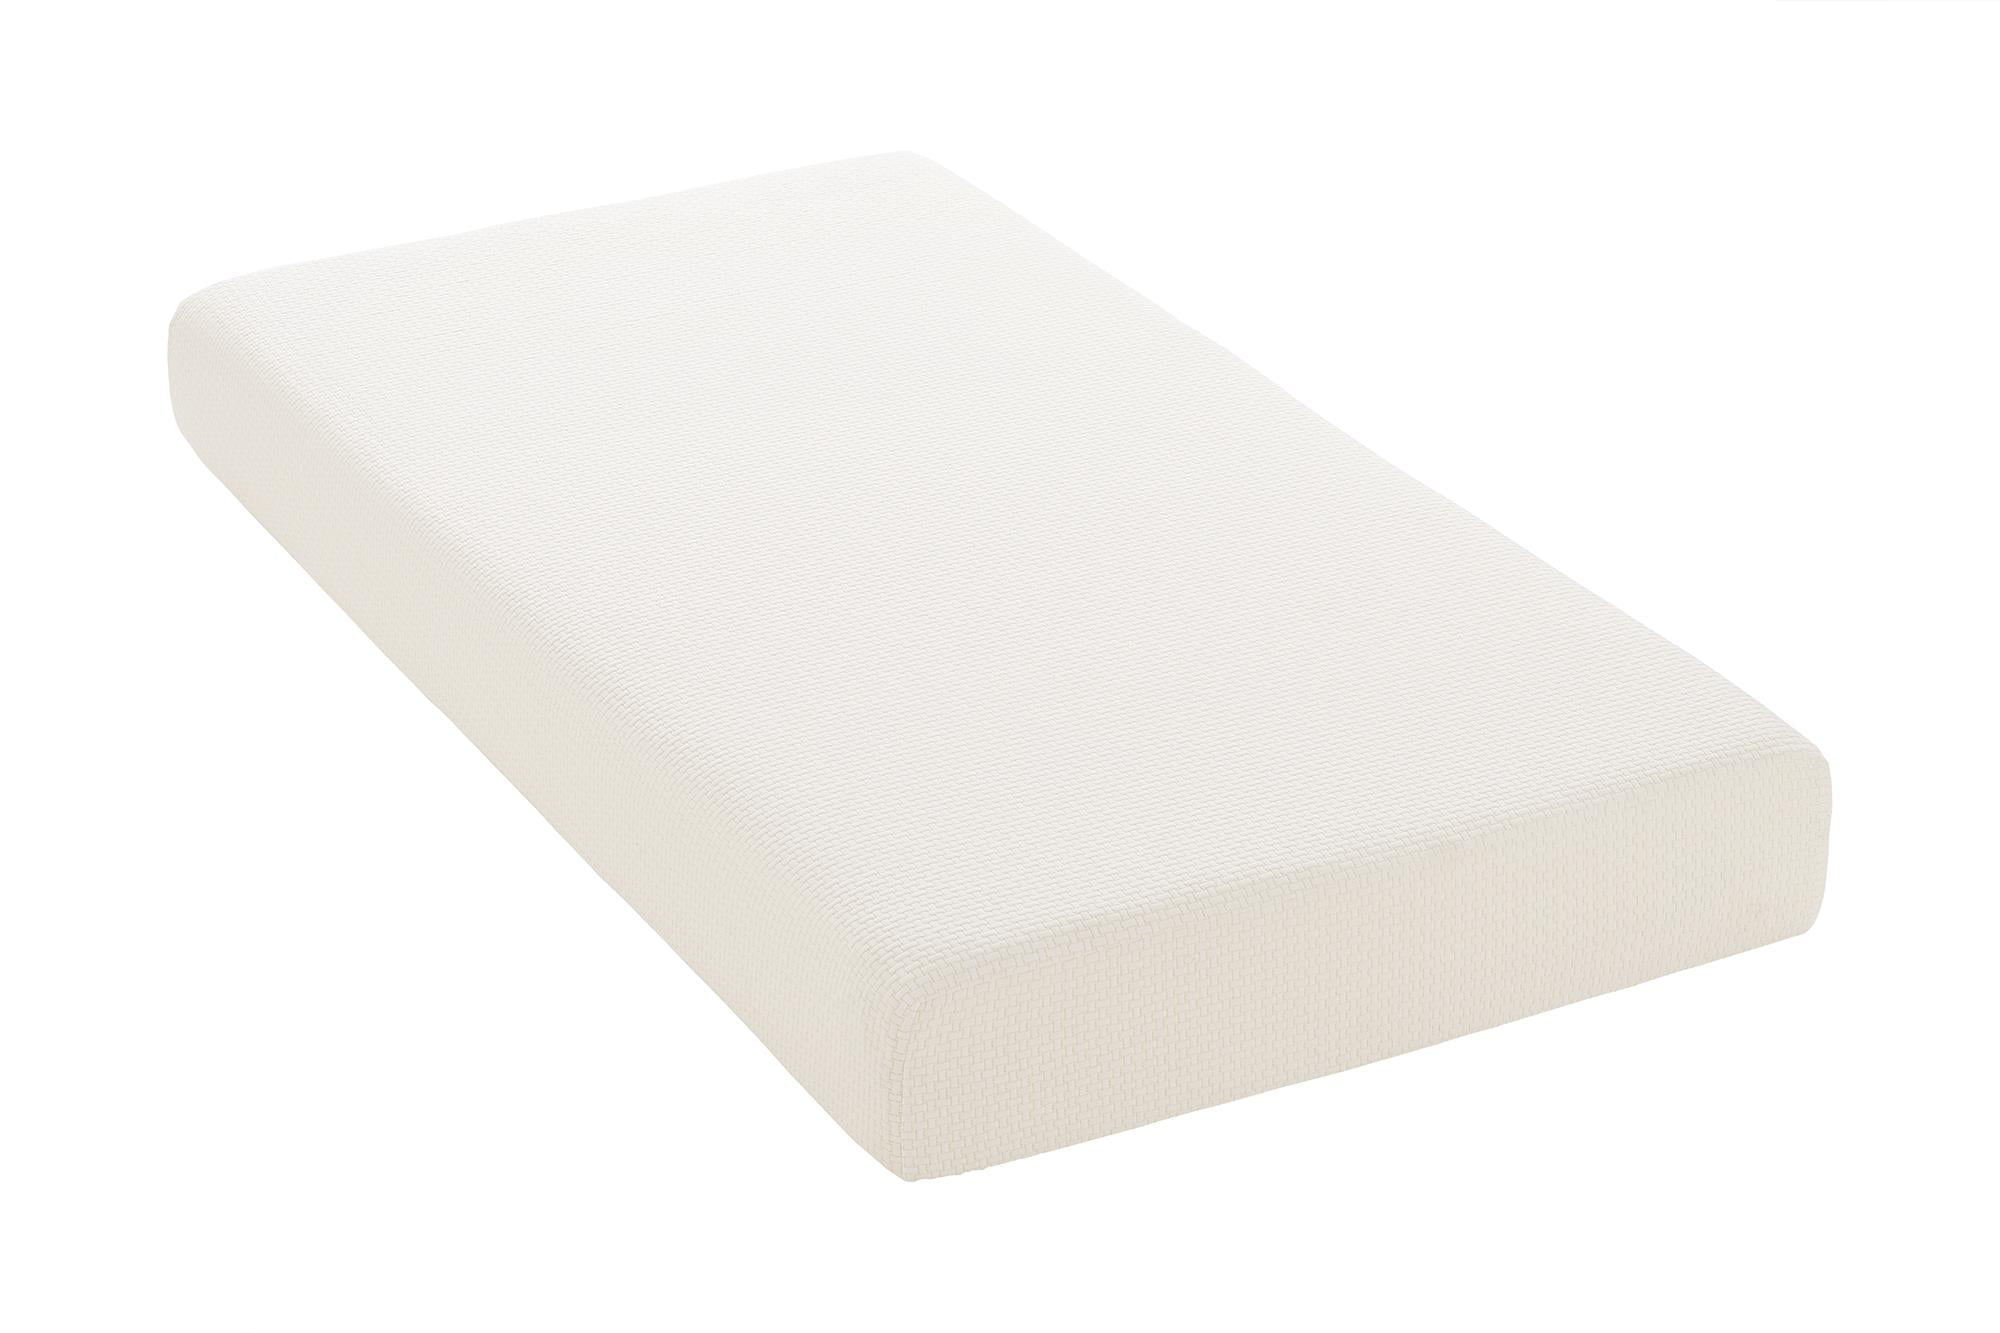 signature sleep gold inspire 8 memory foam mattress